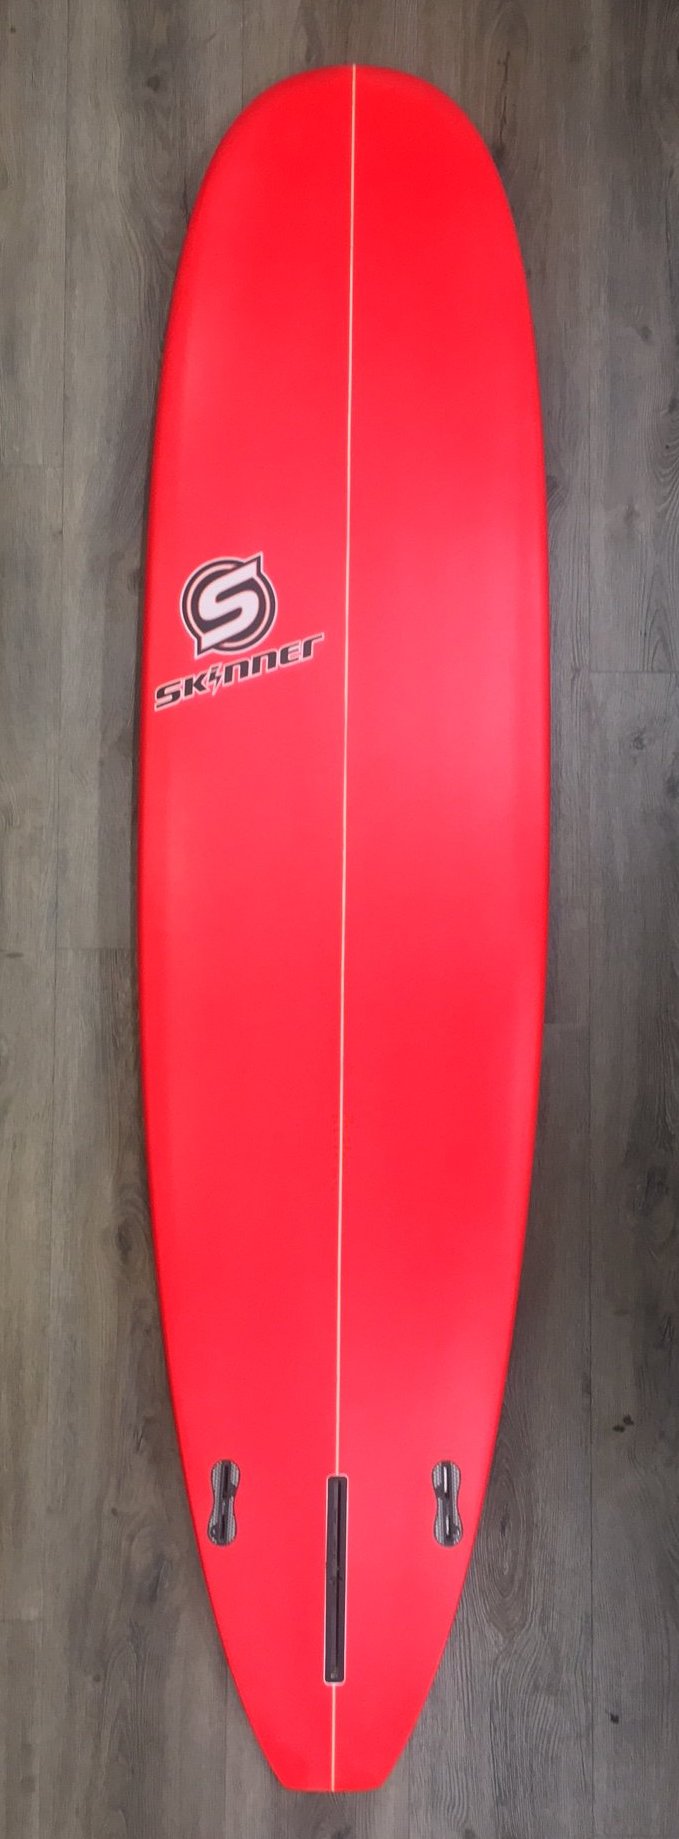 SOLD Skinner 7'6 x 21.25 x 2.75" Epoxy Mini Mini Longboard Tri Fin Poly with Red bottom and Rail Surfboard